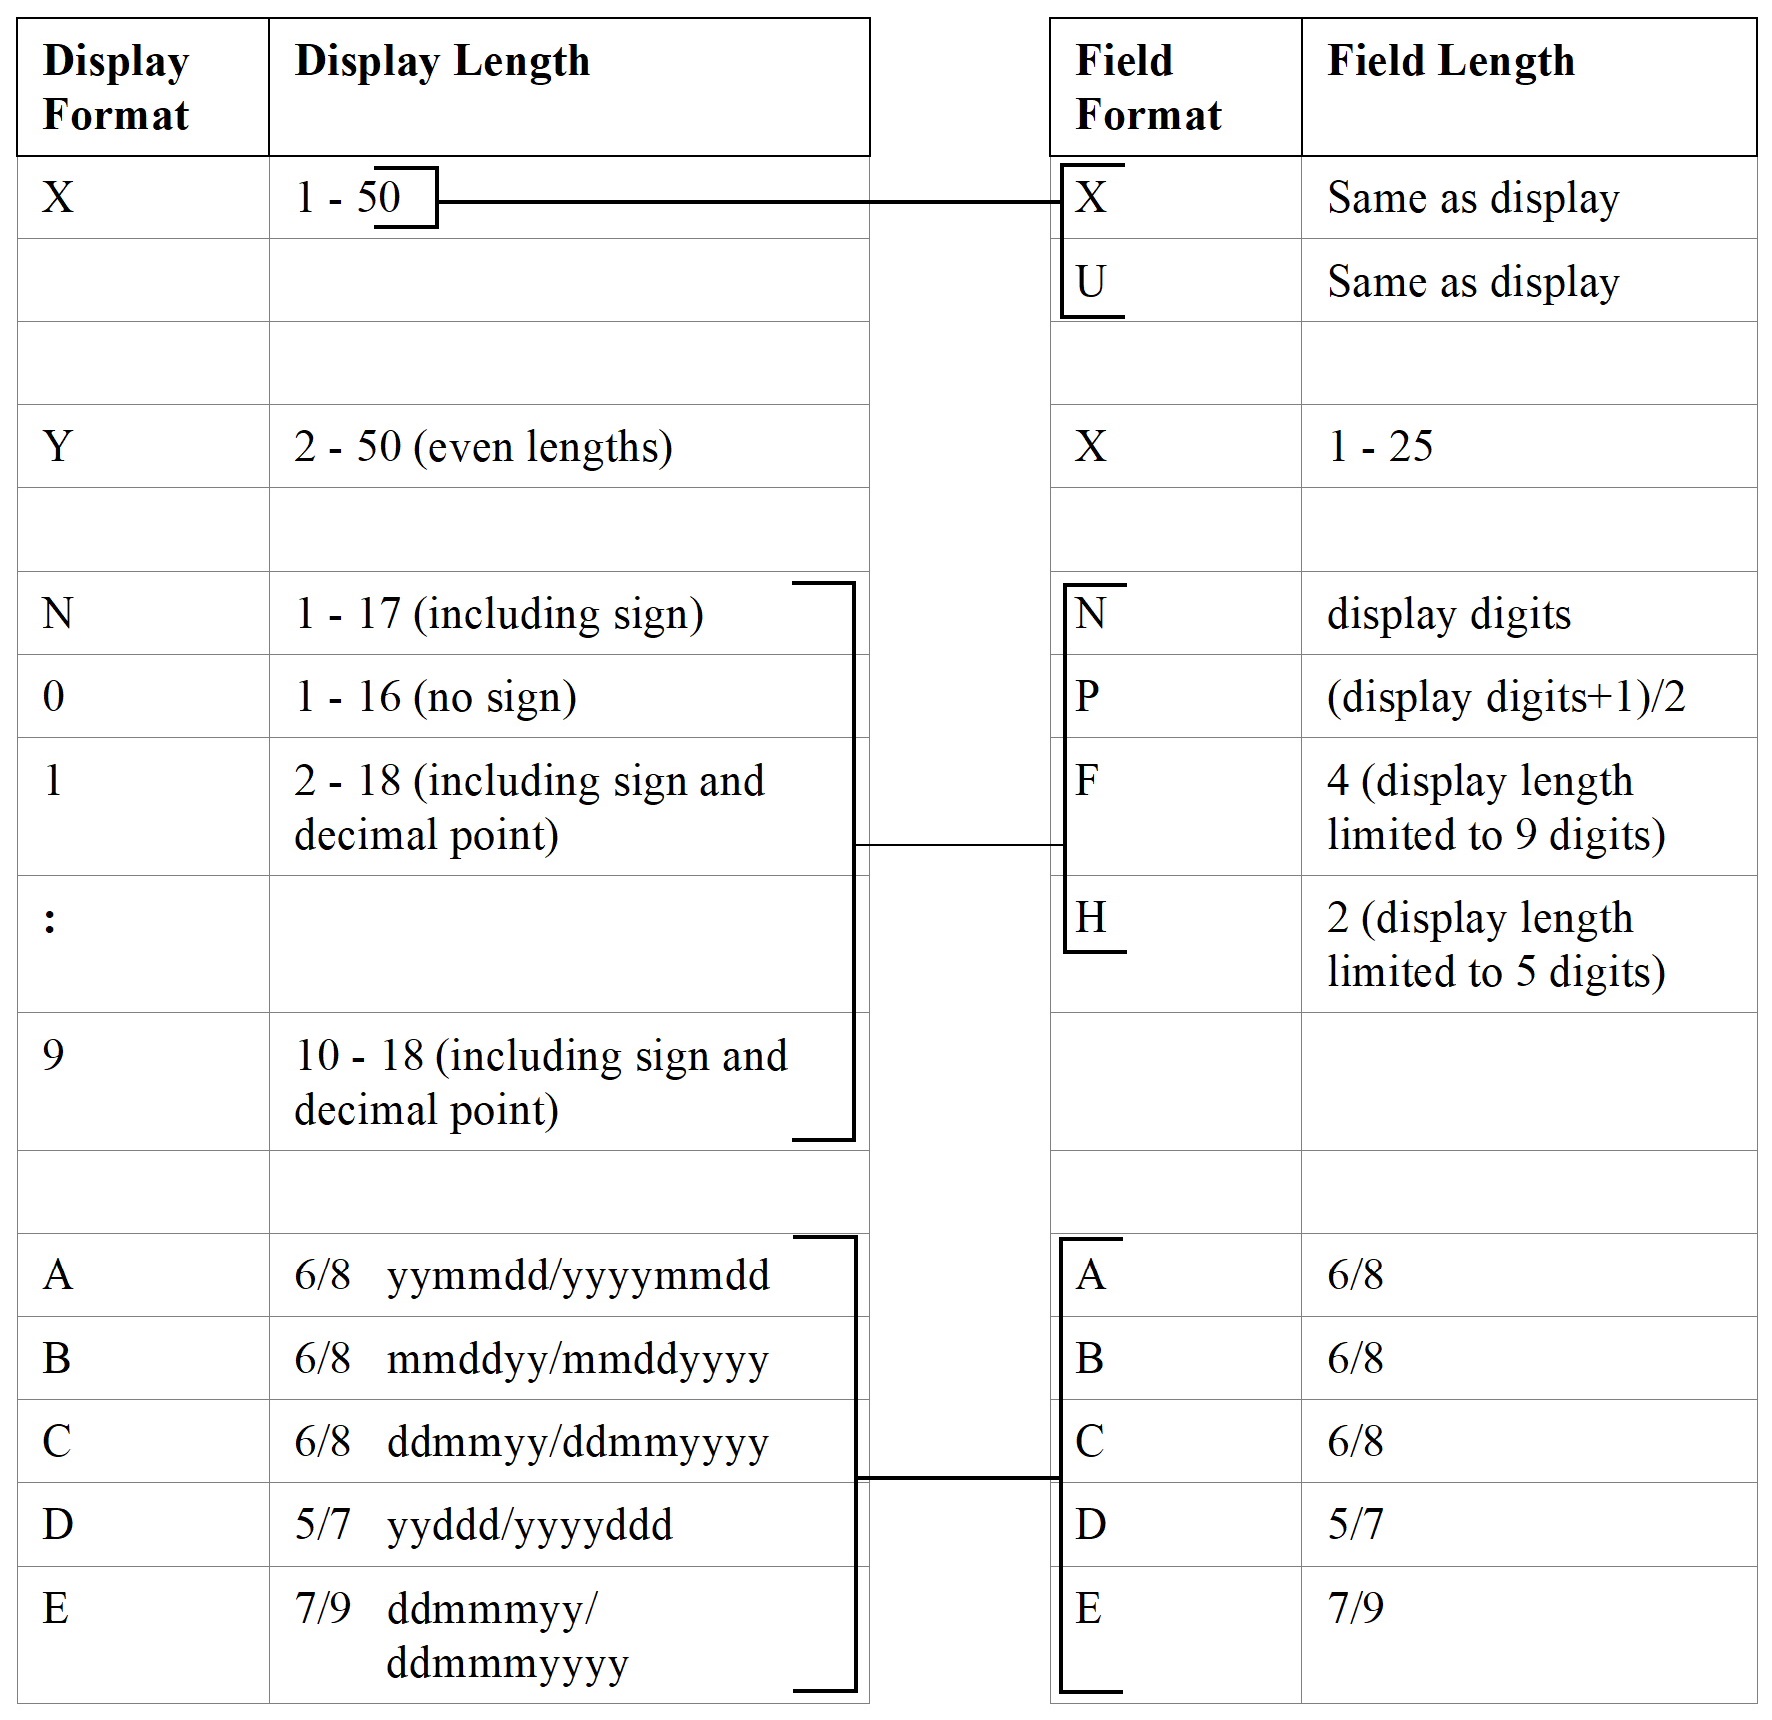 Display/Field Length Combinations